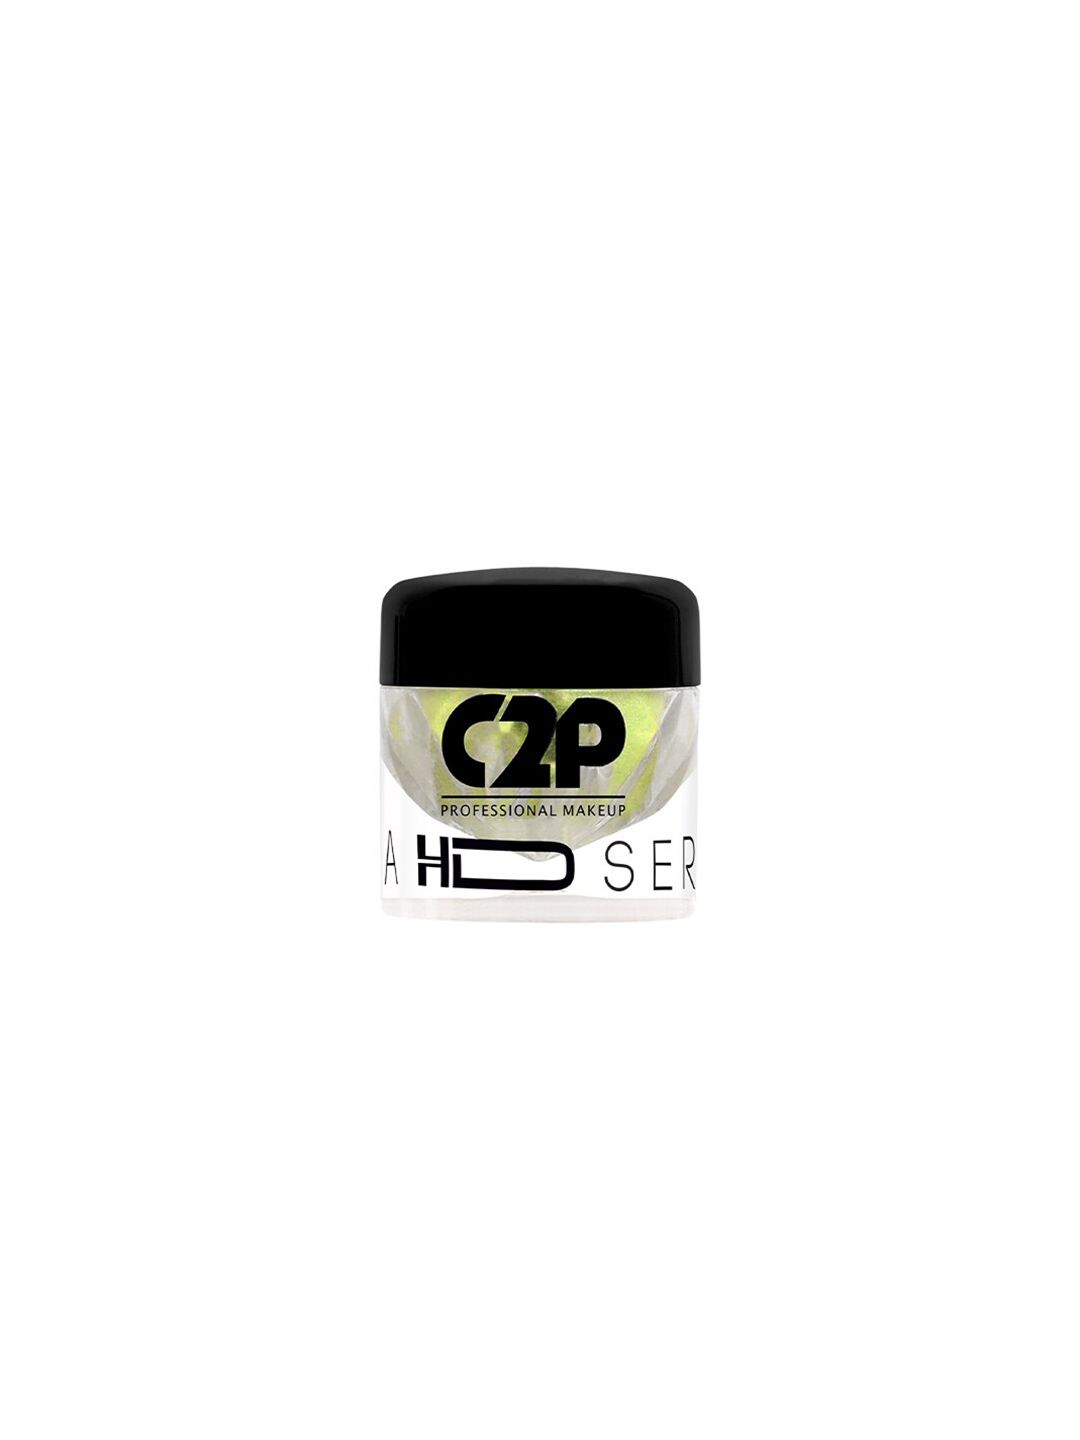 C2P PROFESSIONAL MAKEUP HD Loose Precious Pigments Eyeshadow - Warpper 51 Price in India